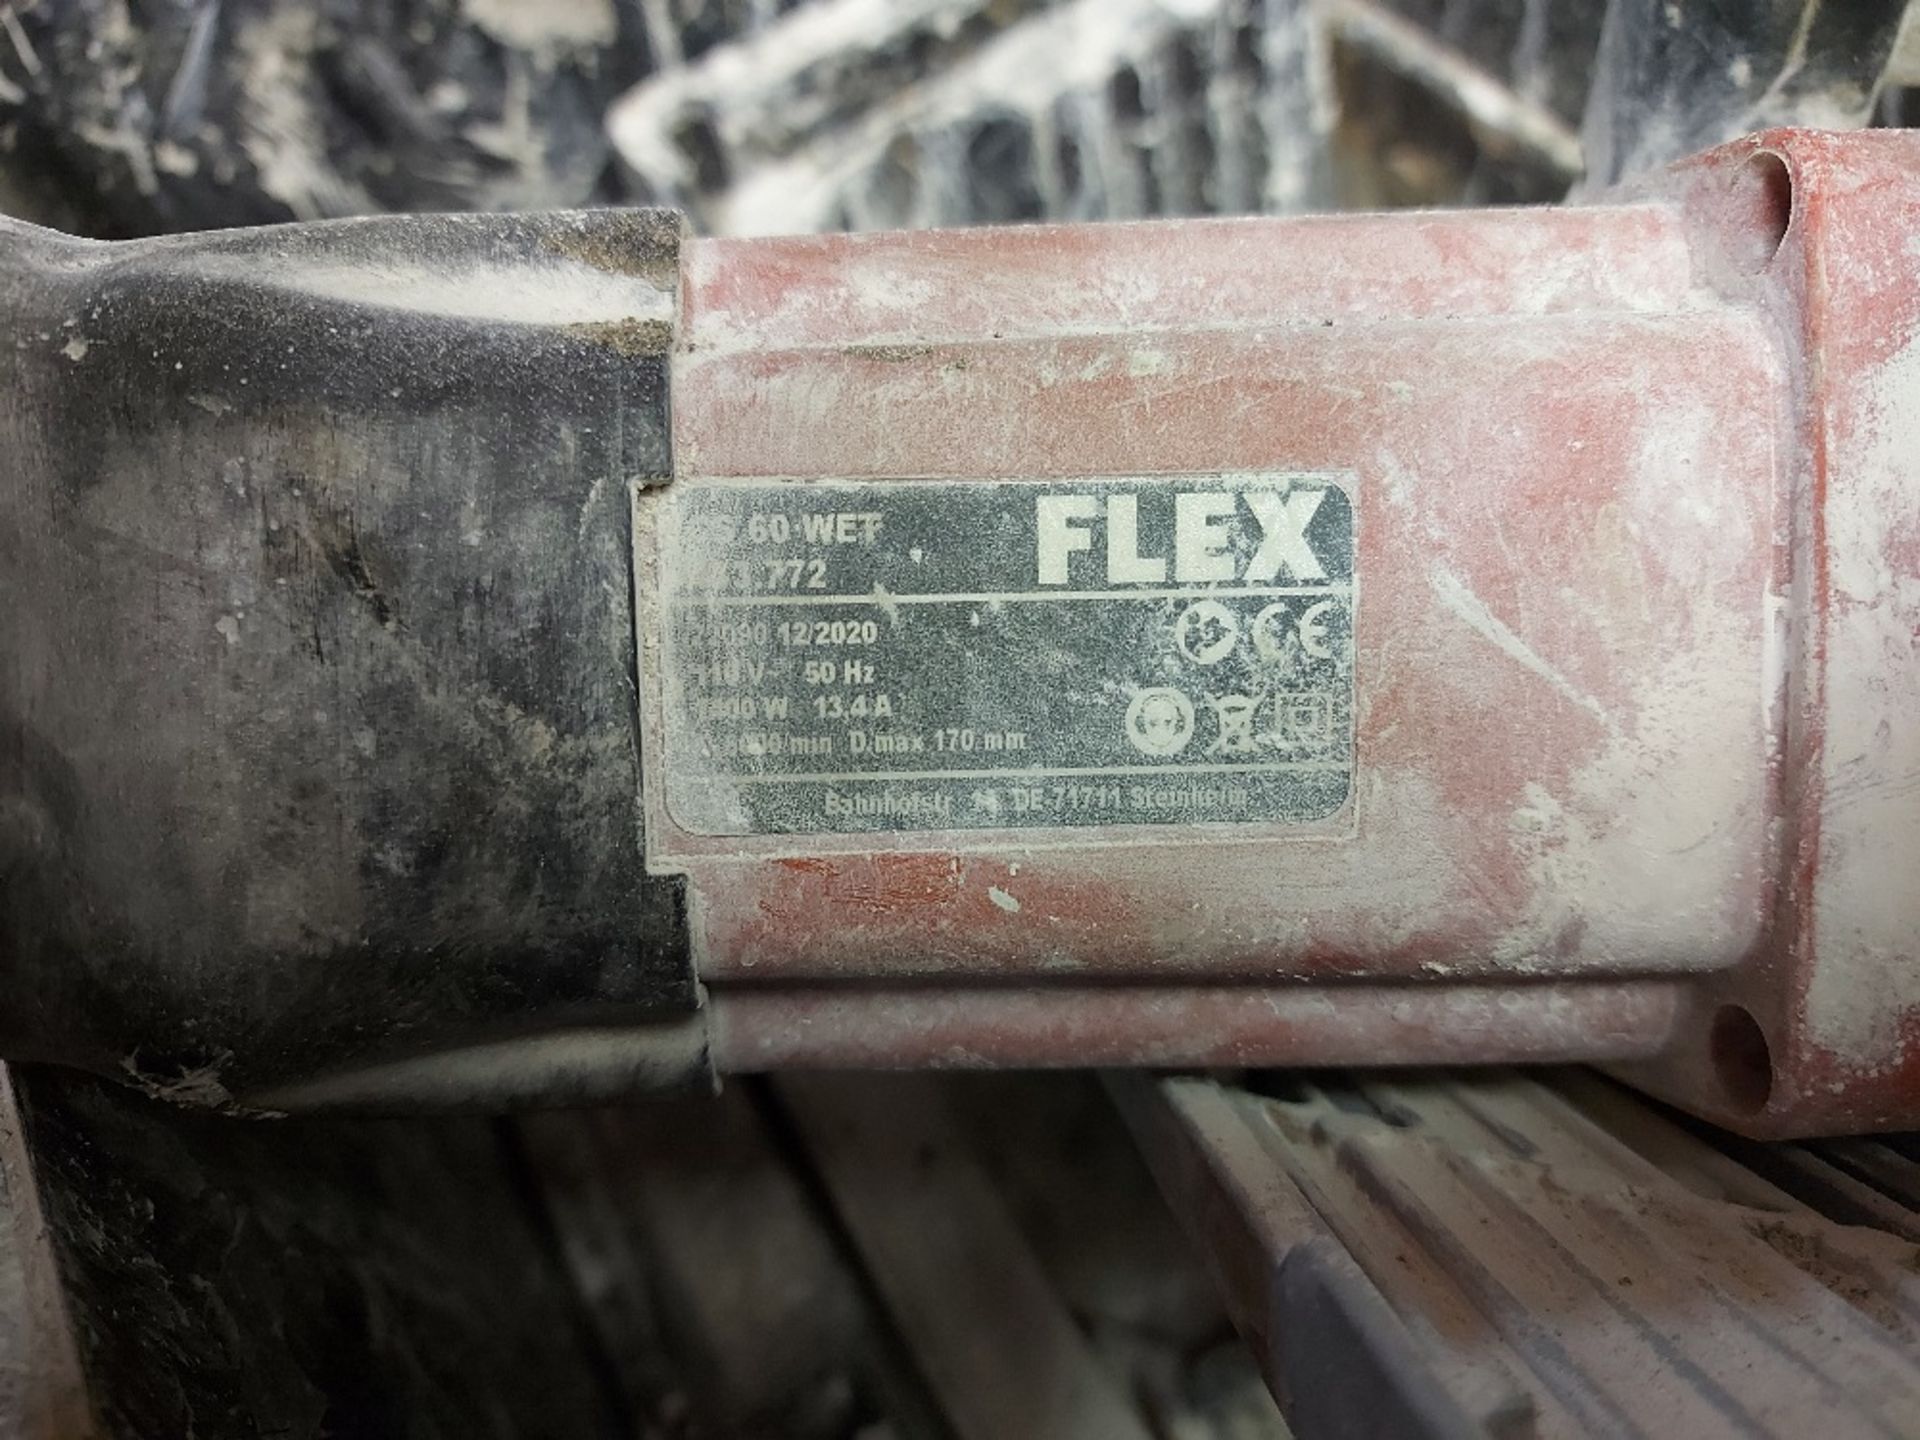 Flex CS 60 Wet Stone Saw - Image 3 of 4